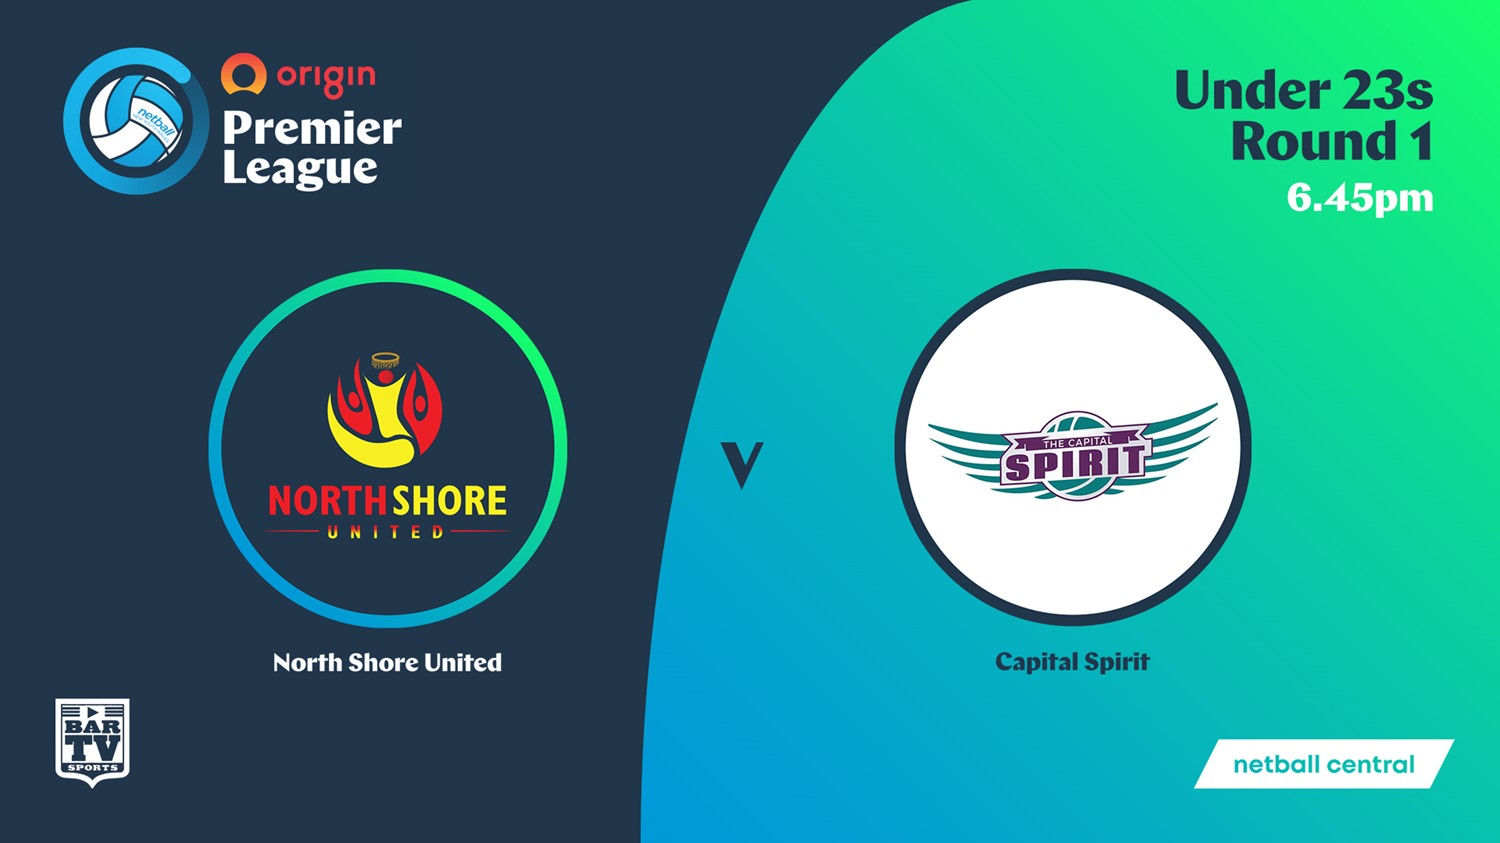 NSW Prem League Round 1 - Court 5 - U23s - North Shore United v Capital Spirit Minigame Slate Image